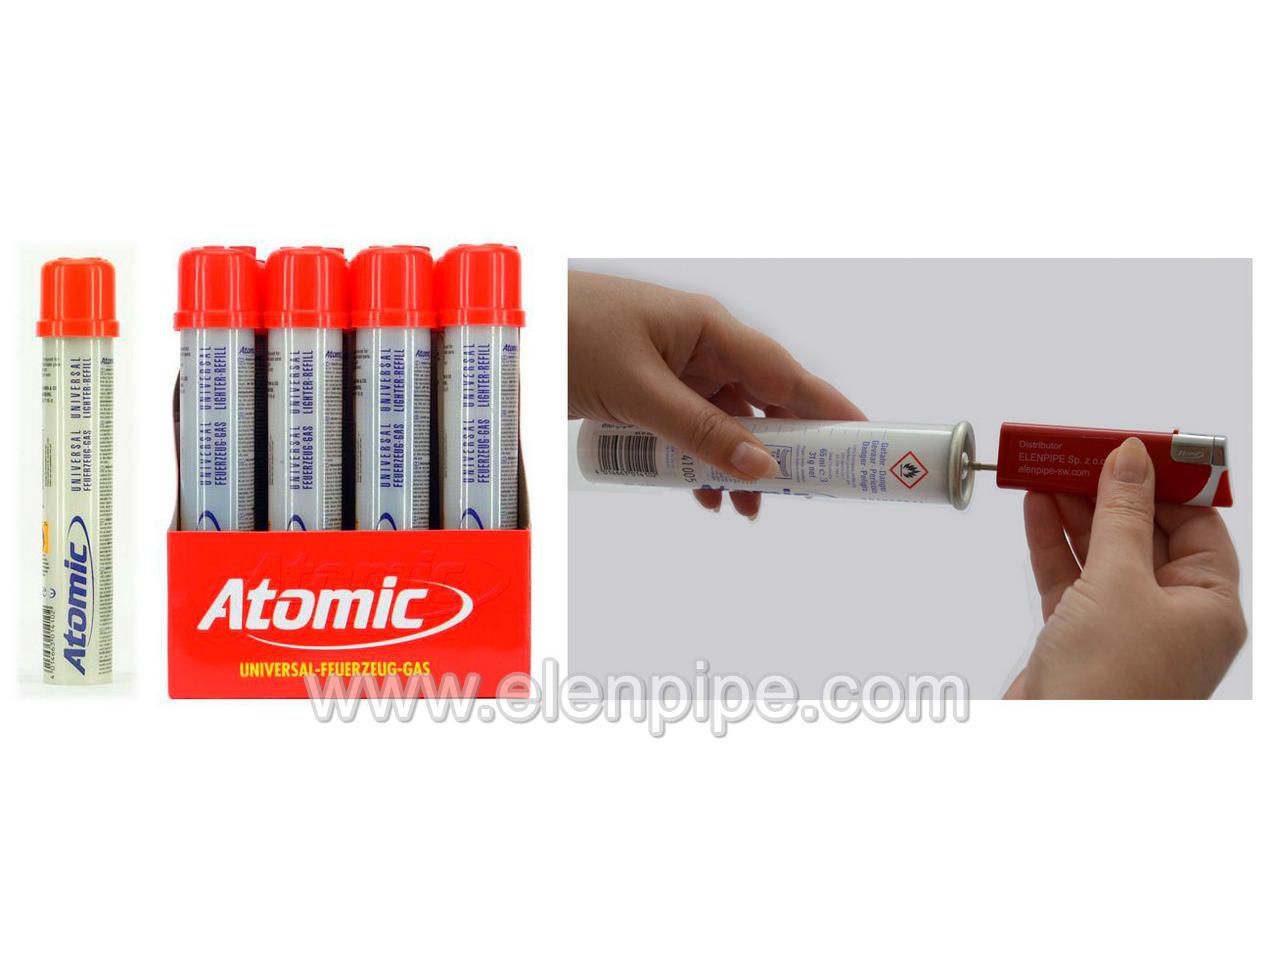 Lighter Fuel Atomic 125 ml gasoline